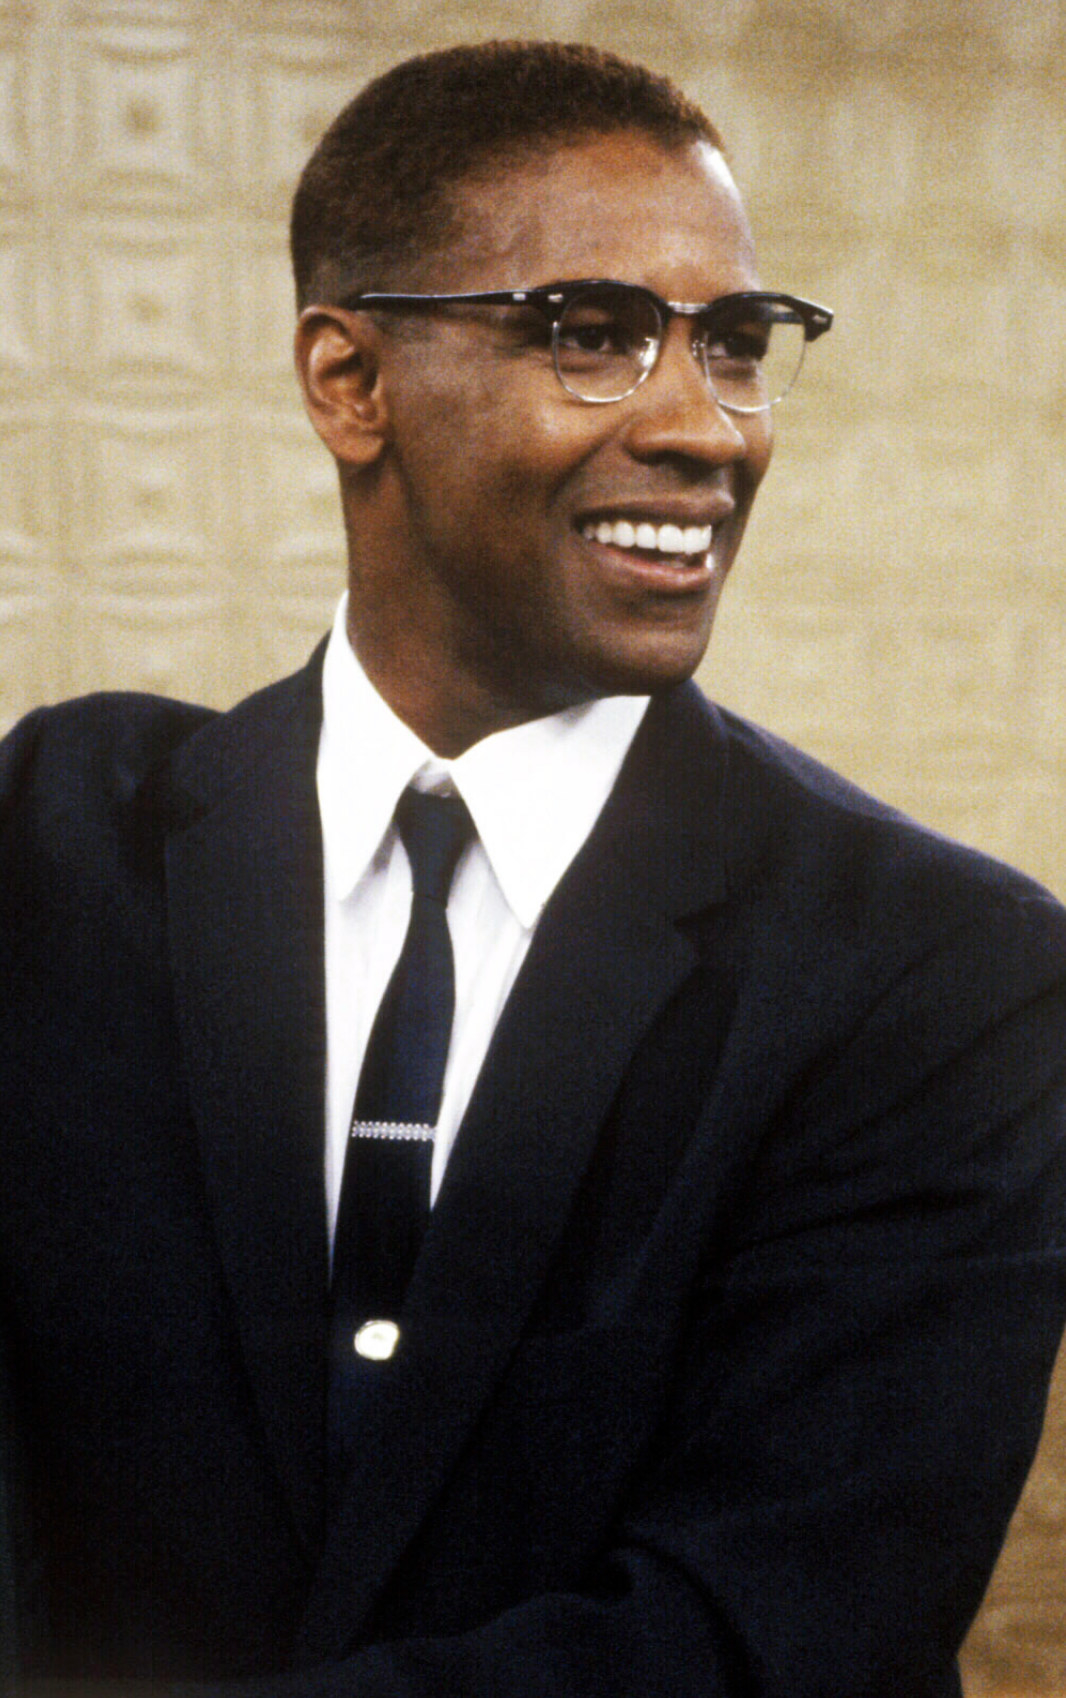 Washington wearing suit, tie, and Malcolm X glasses (black, round rim)